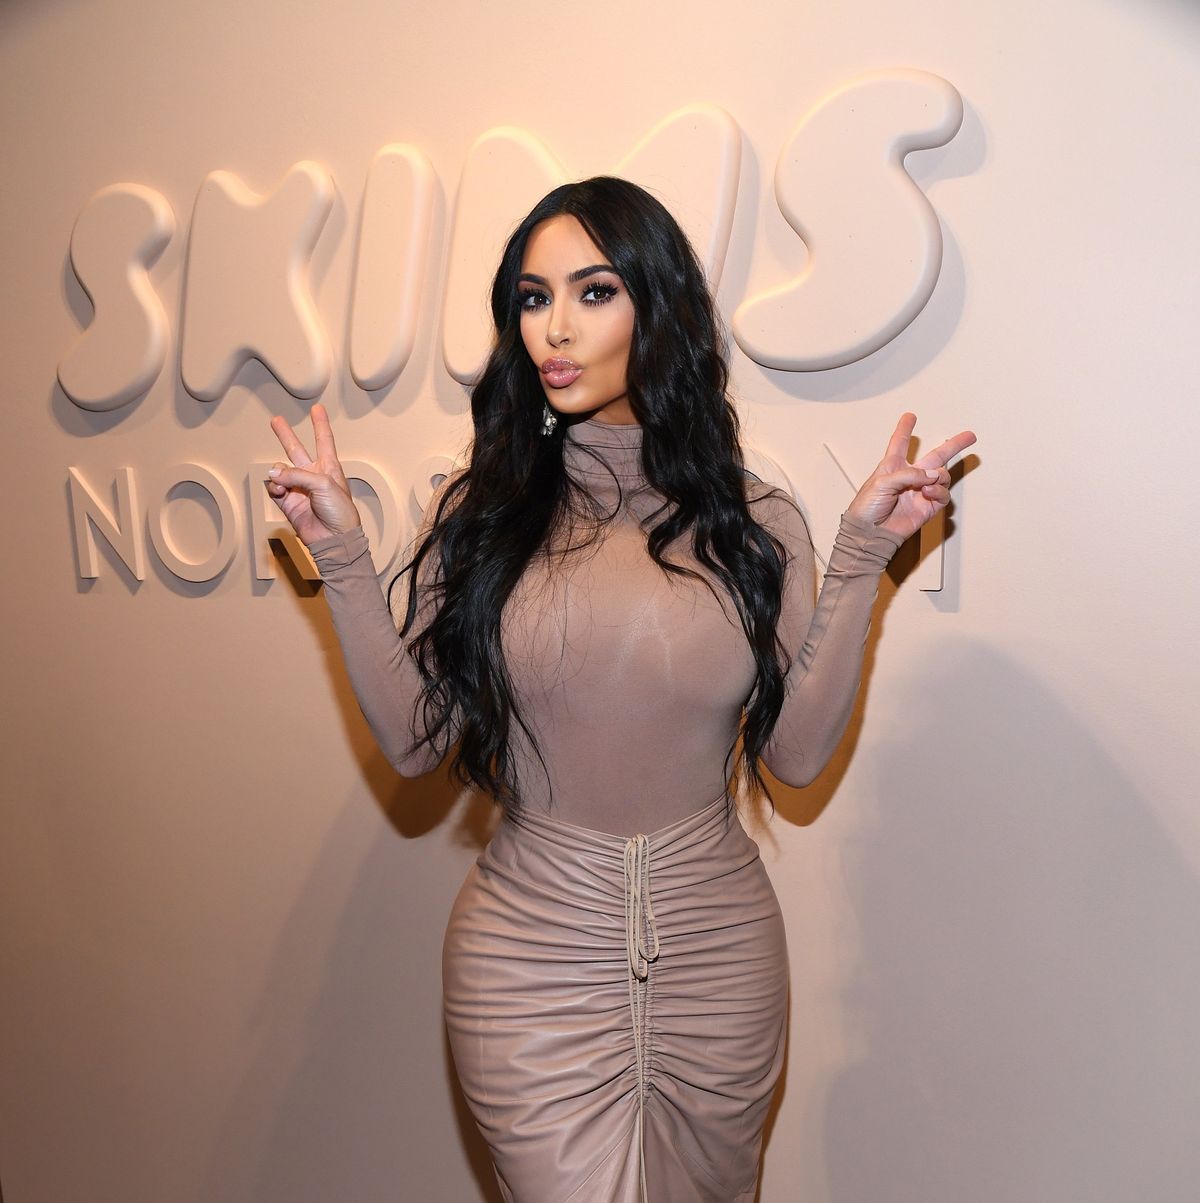 Kim Kardashian West celebrates the launch of SKIMS at Nordstrom